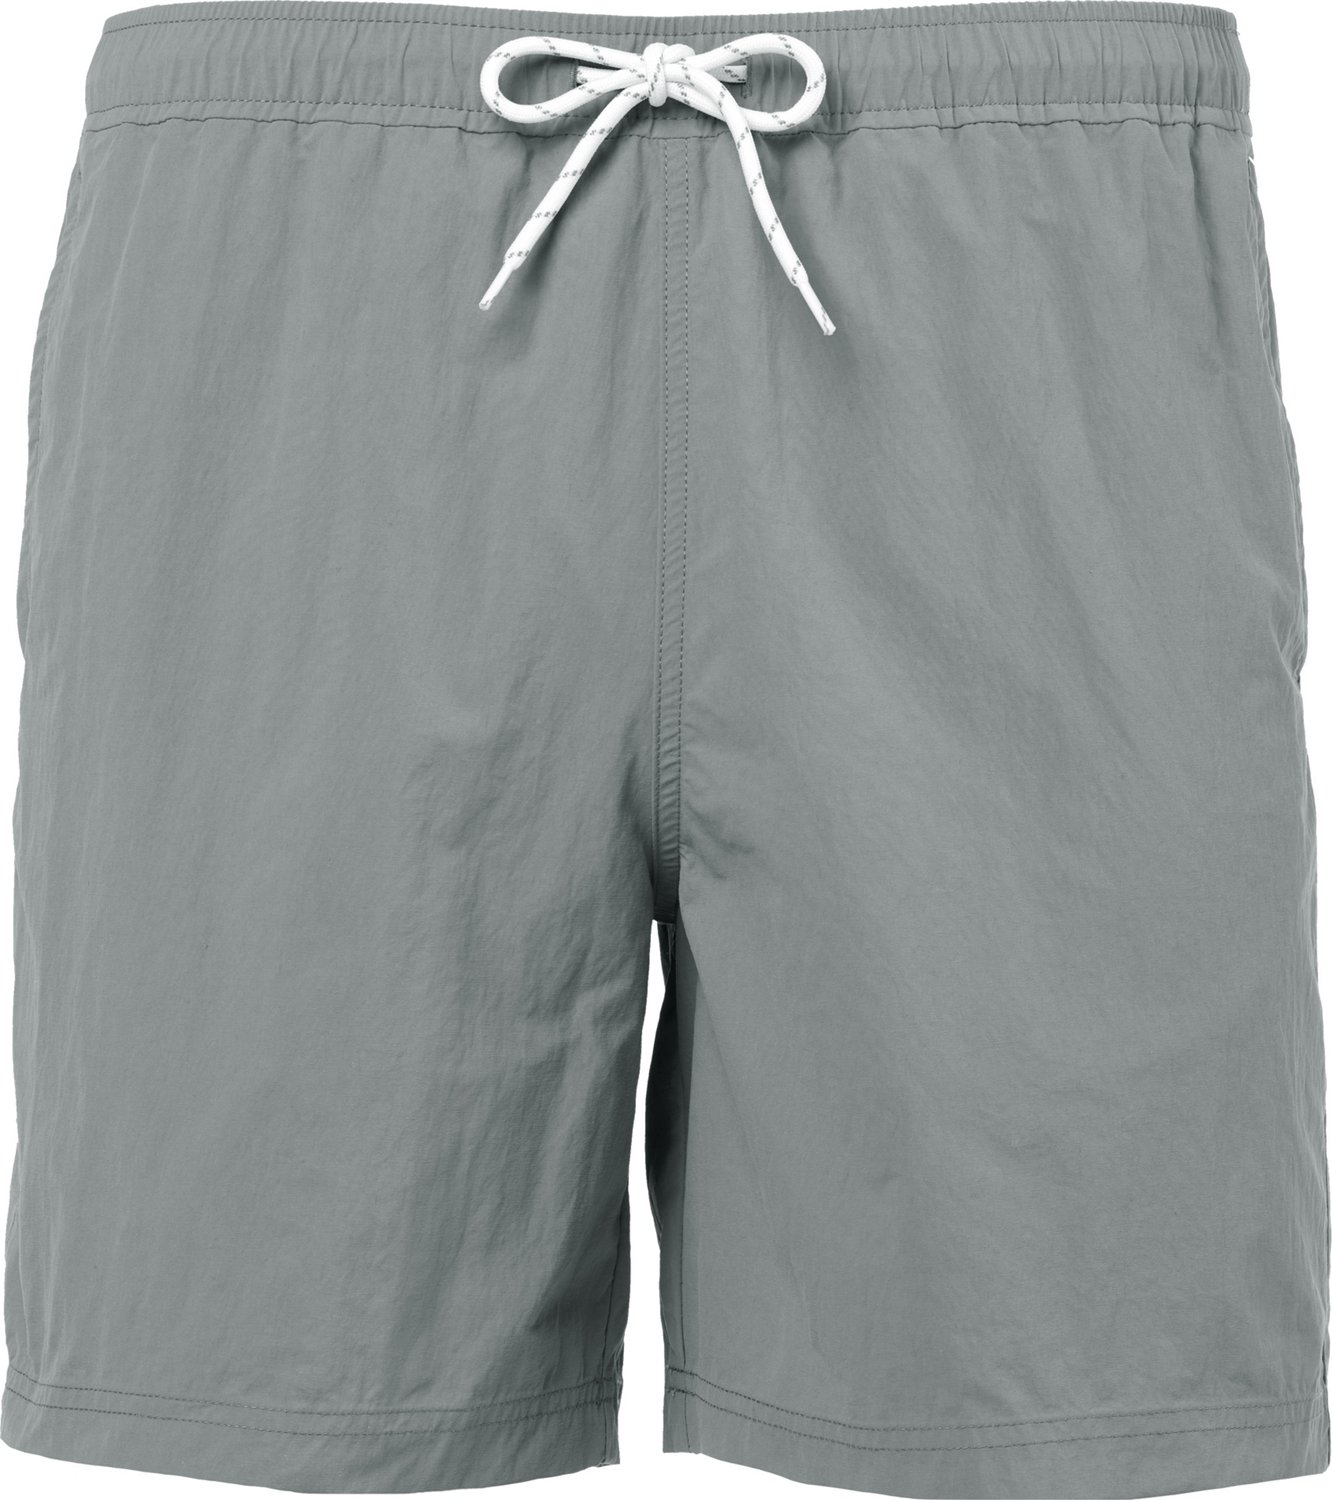 Magellan Outdoors Men's Shore & Line Solid Shorts 7 in